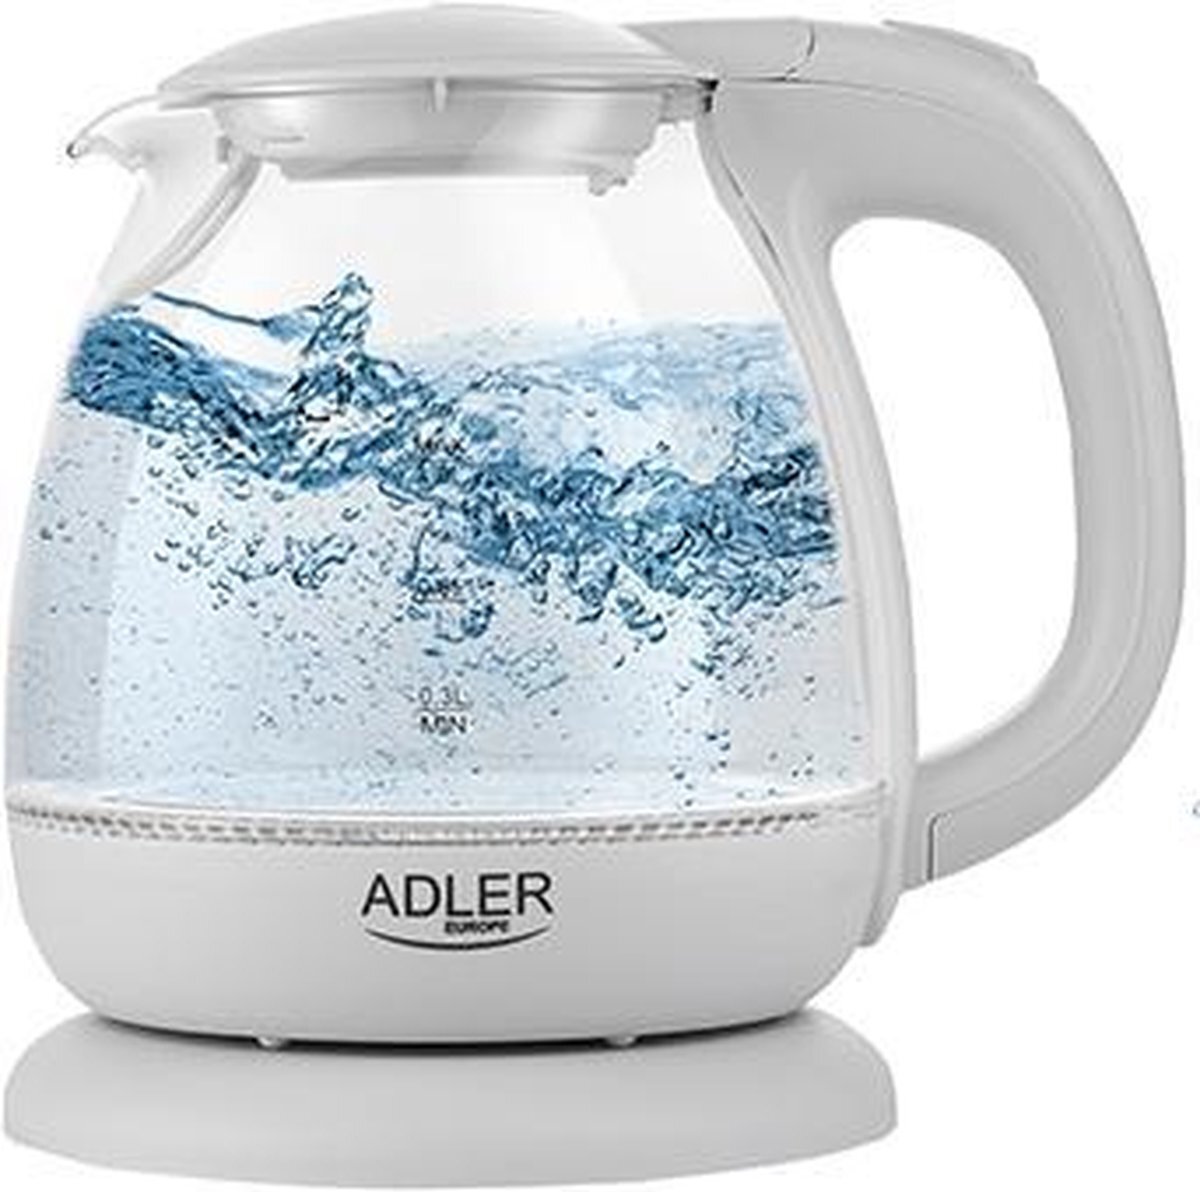 Adler Waterkoker - grijs - 1100 watt - 1 liter